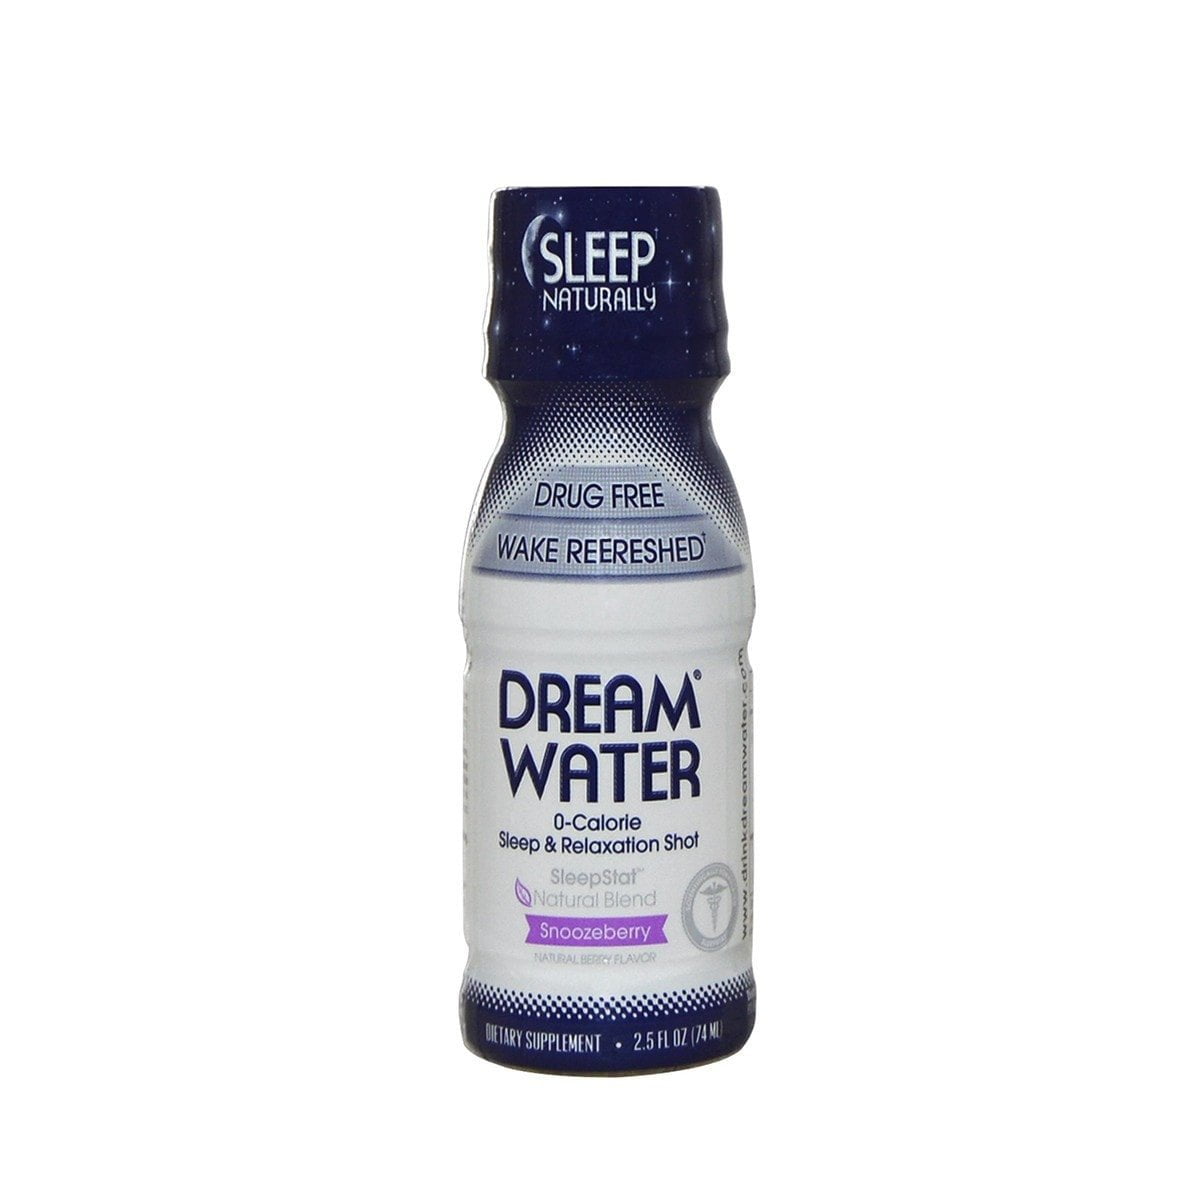 Dream Water Natural Sleep & Relaxation Aid Shot, 0 Calorie, GABA, MELATONIN, 5-HTP, 2.5oz Shot, Snoozeberry, 12 Value Pack, Product image 1